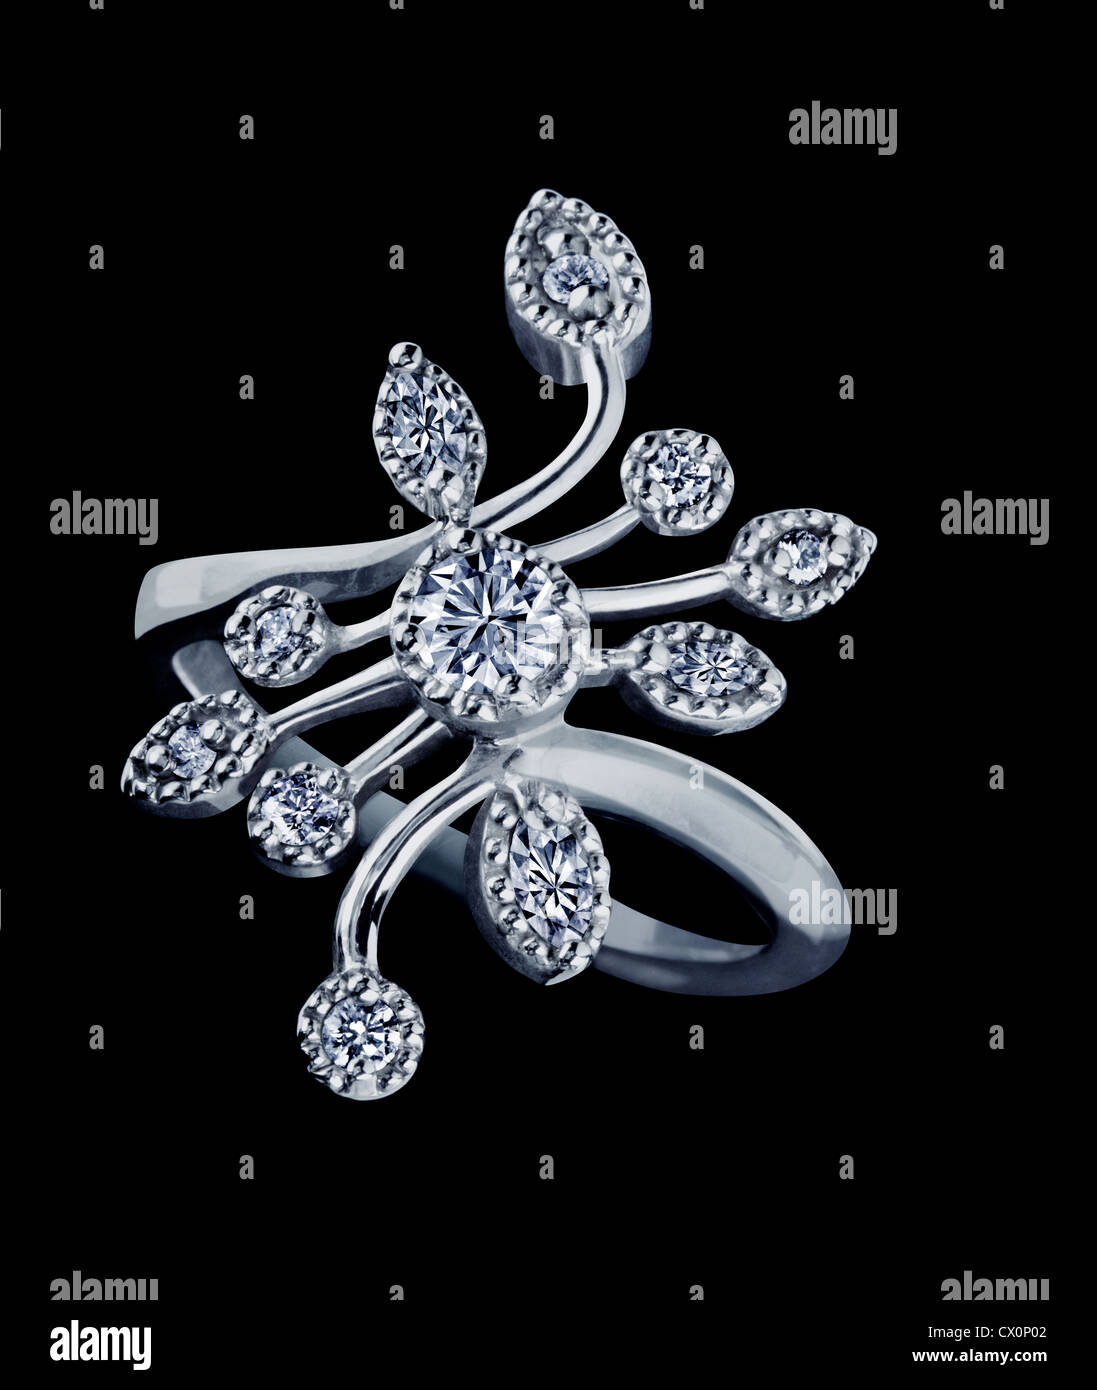 Diamond Ring Stock Photo